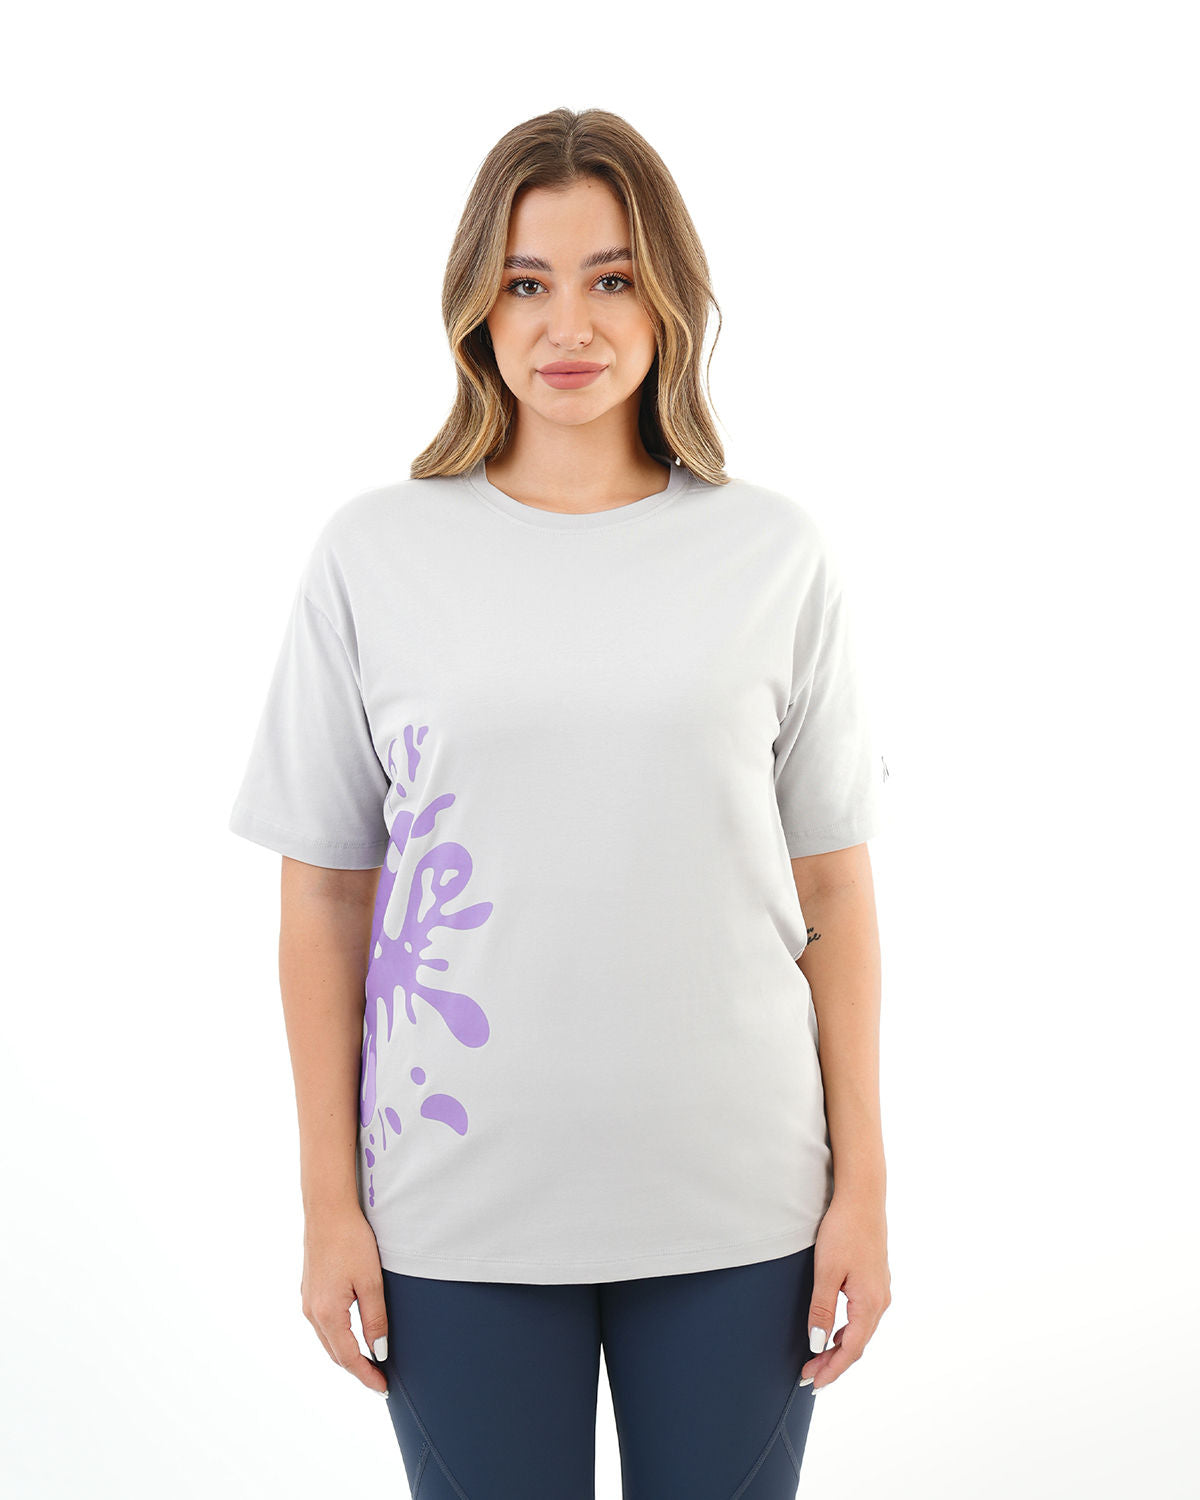 Oversized Splash Women's T-Shirt - Gray With Violet print